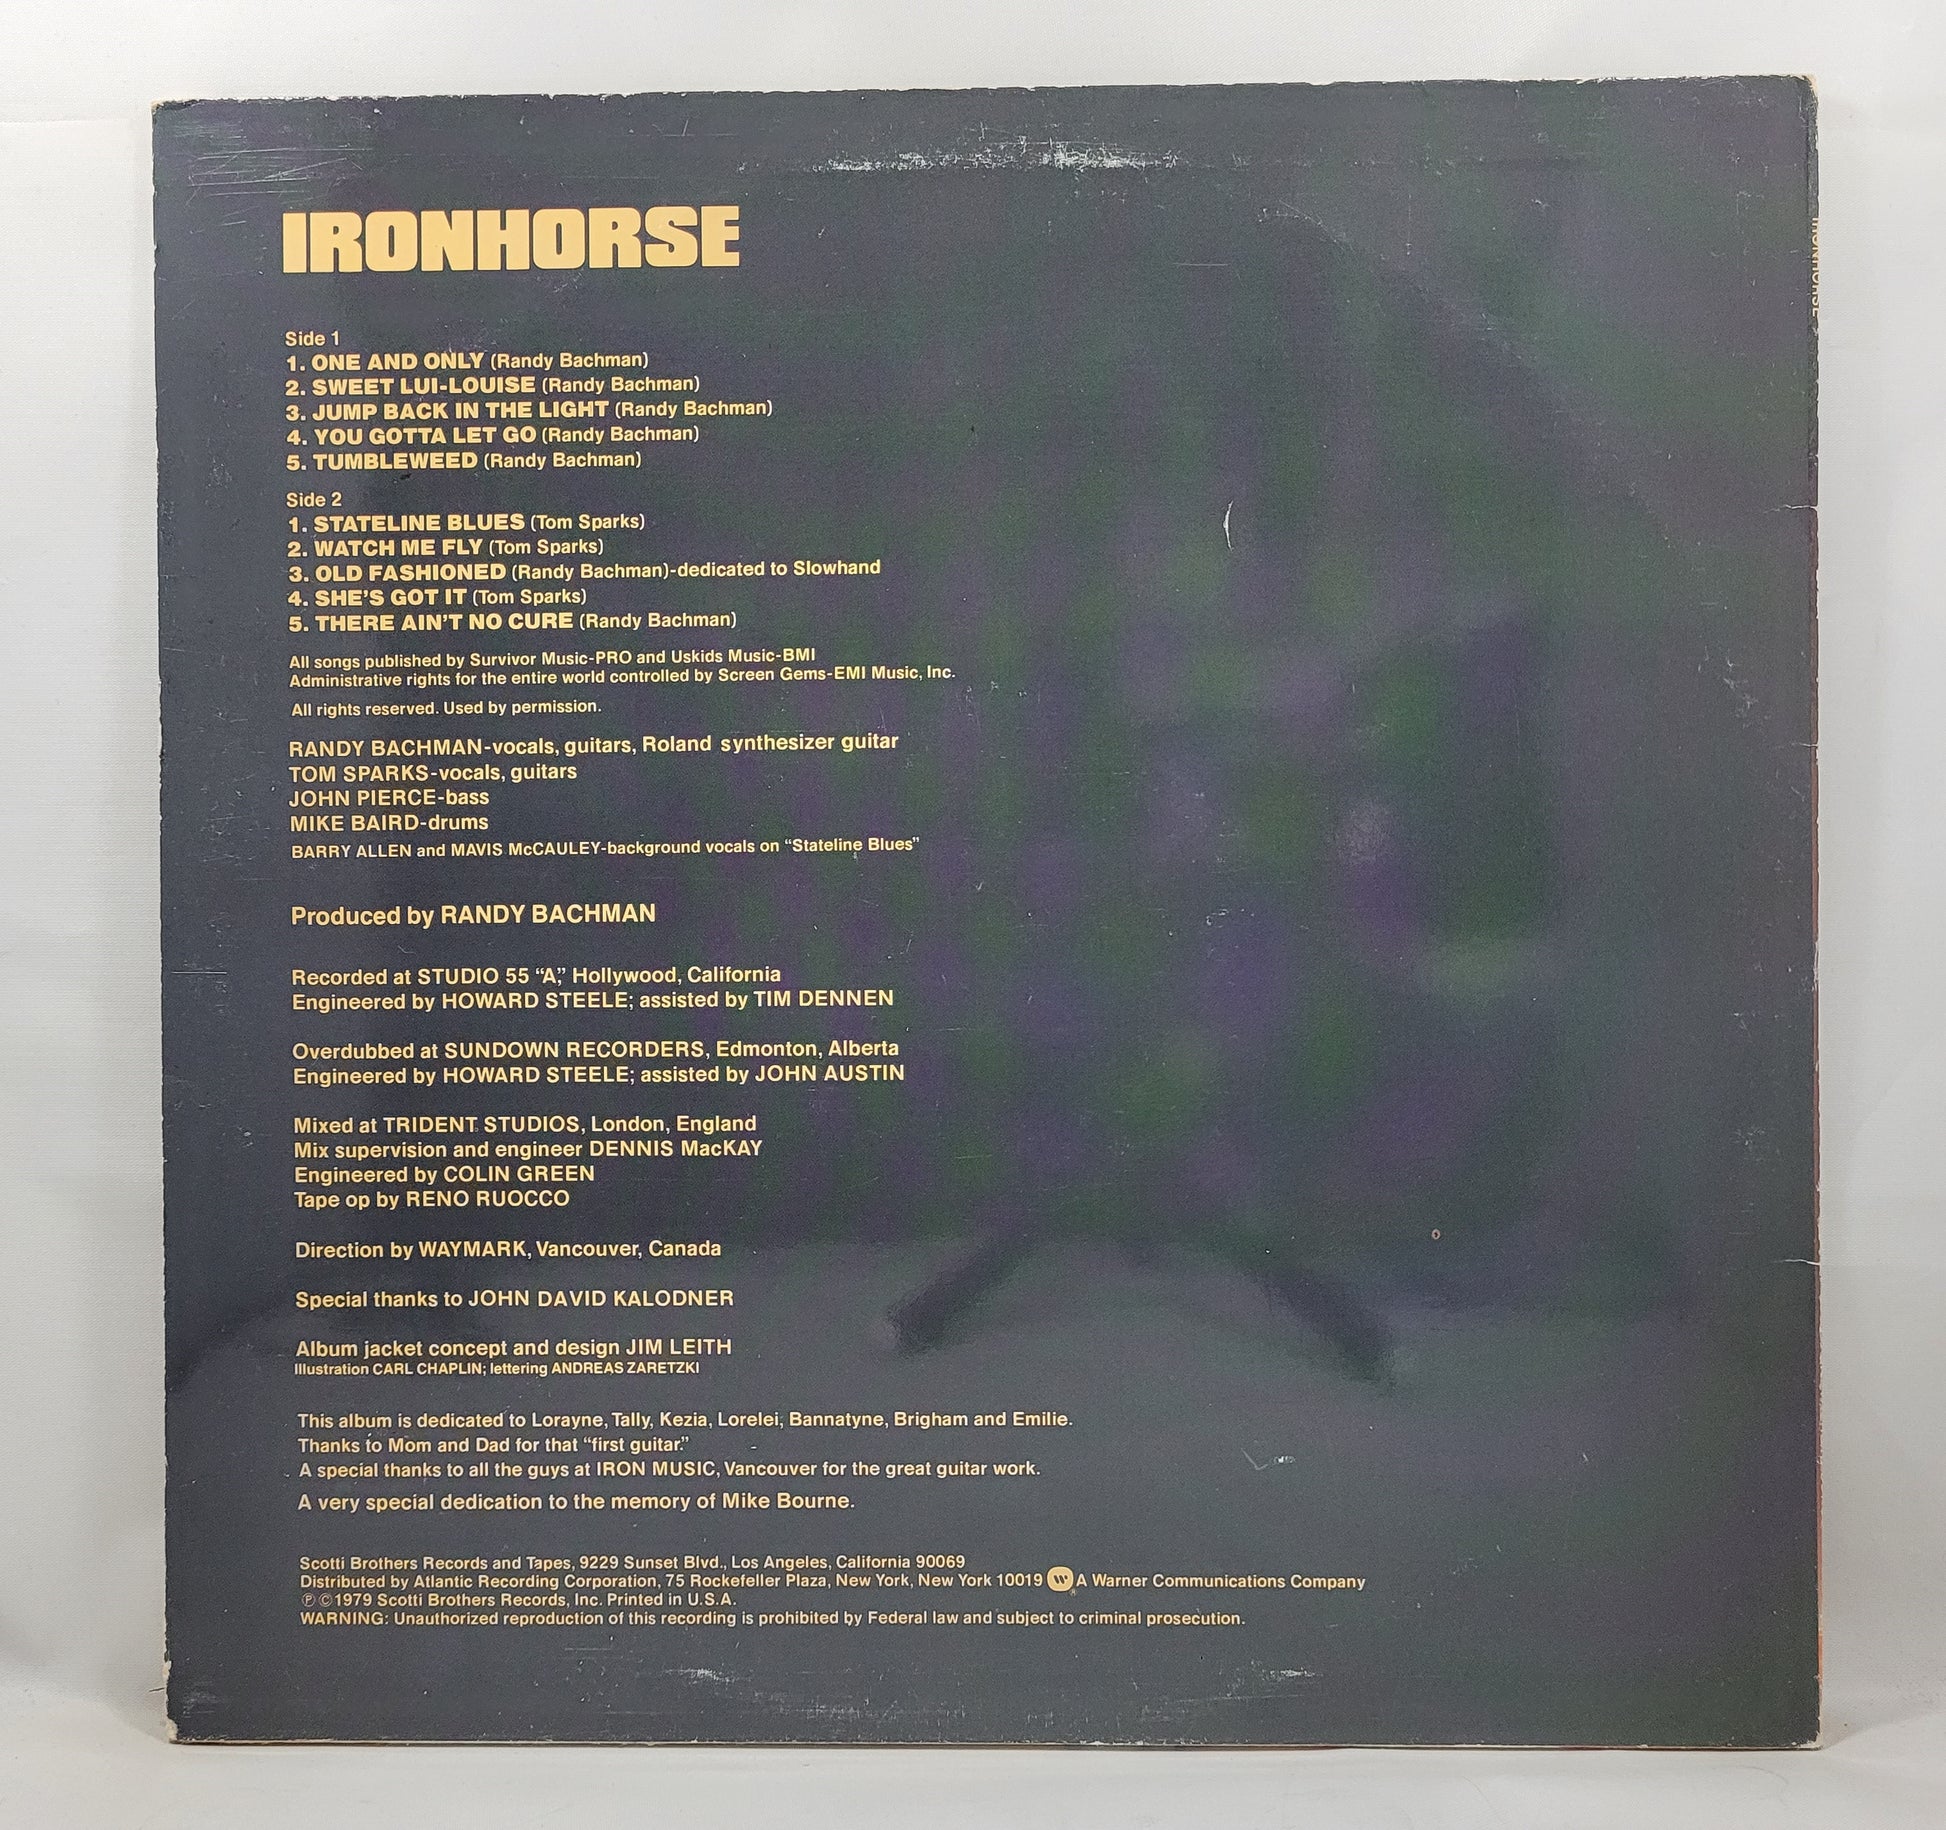 Ironhorse - Ironhorse [1979 Monarch Pressing] [Used Vinyl Record LP] [B]